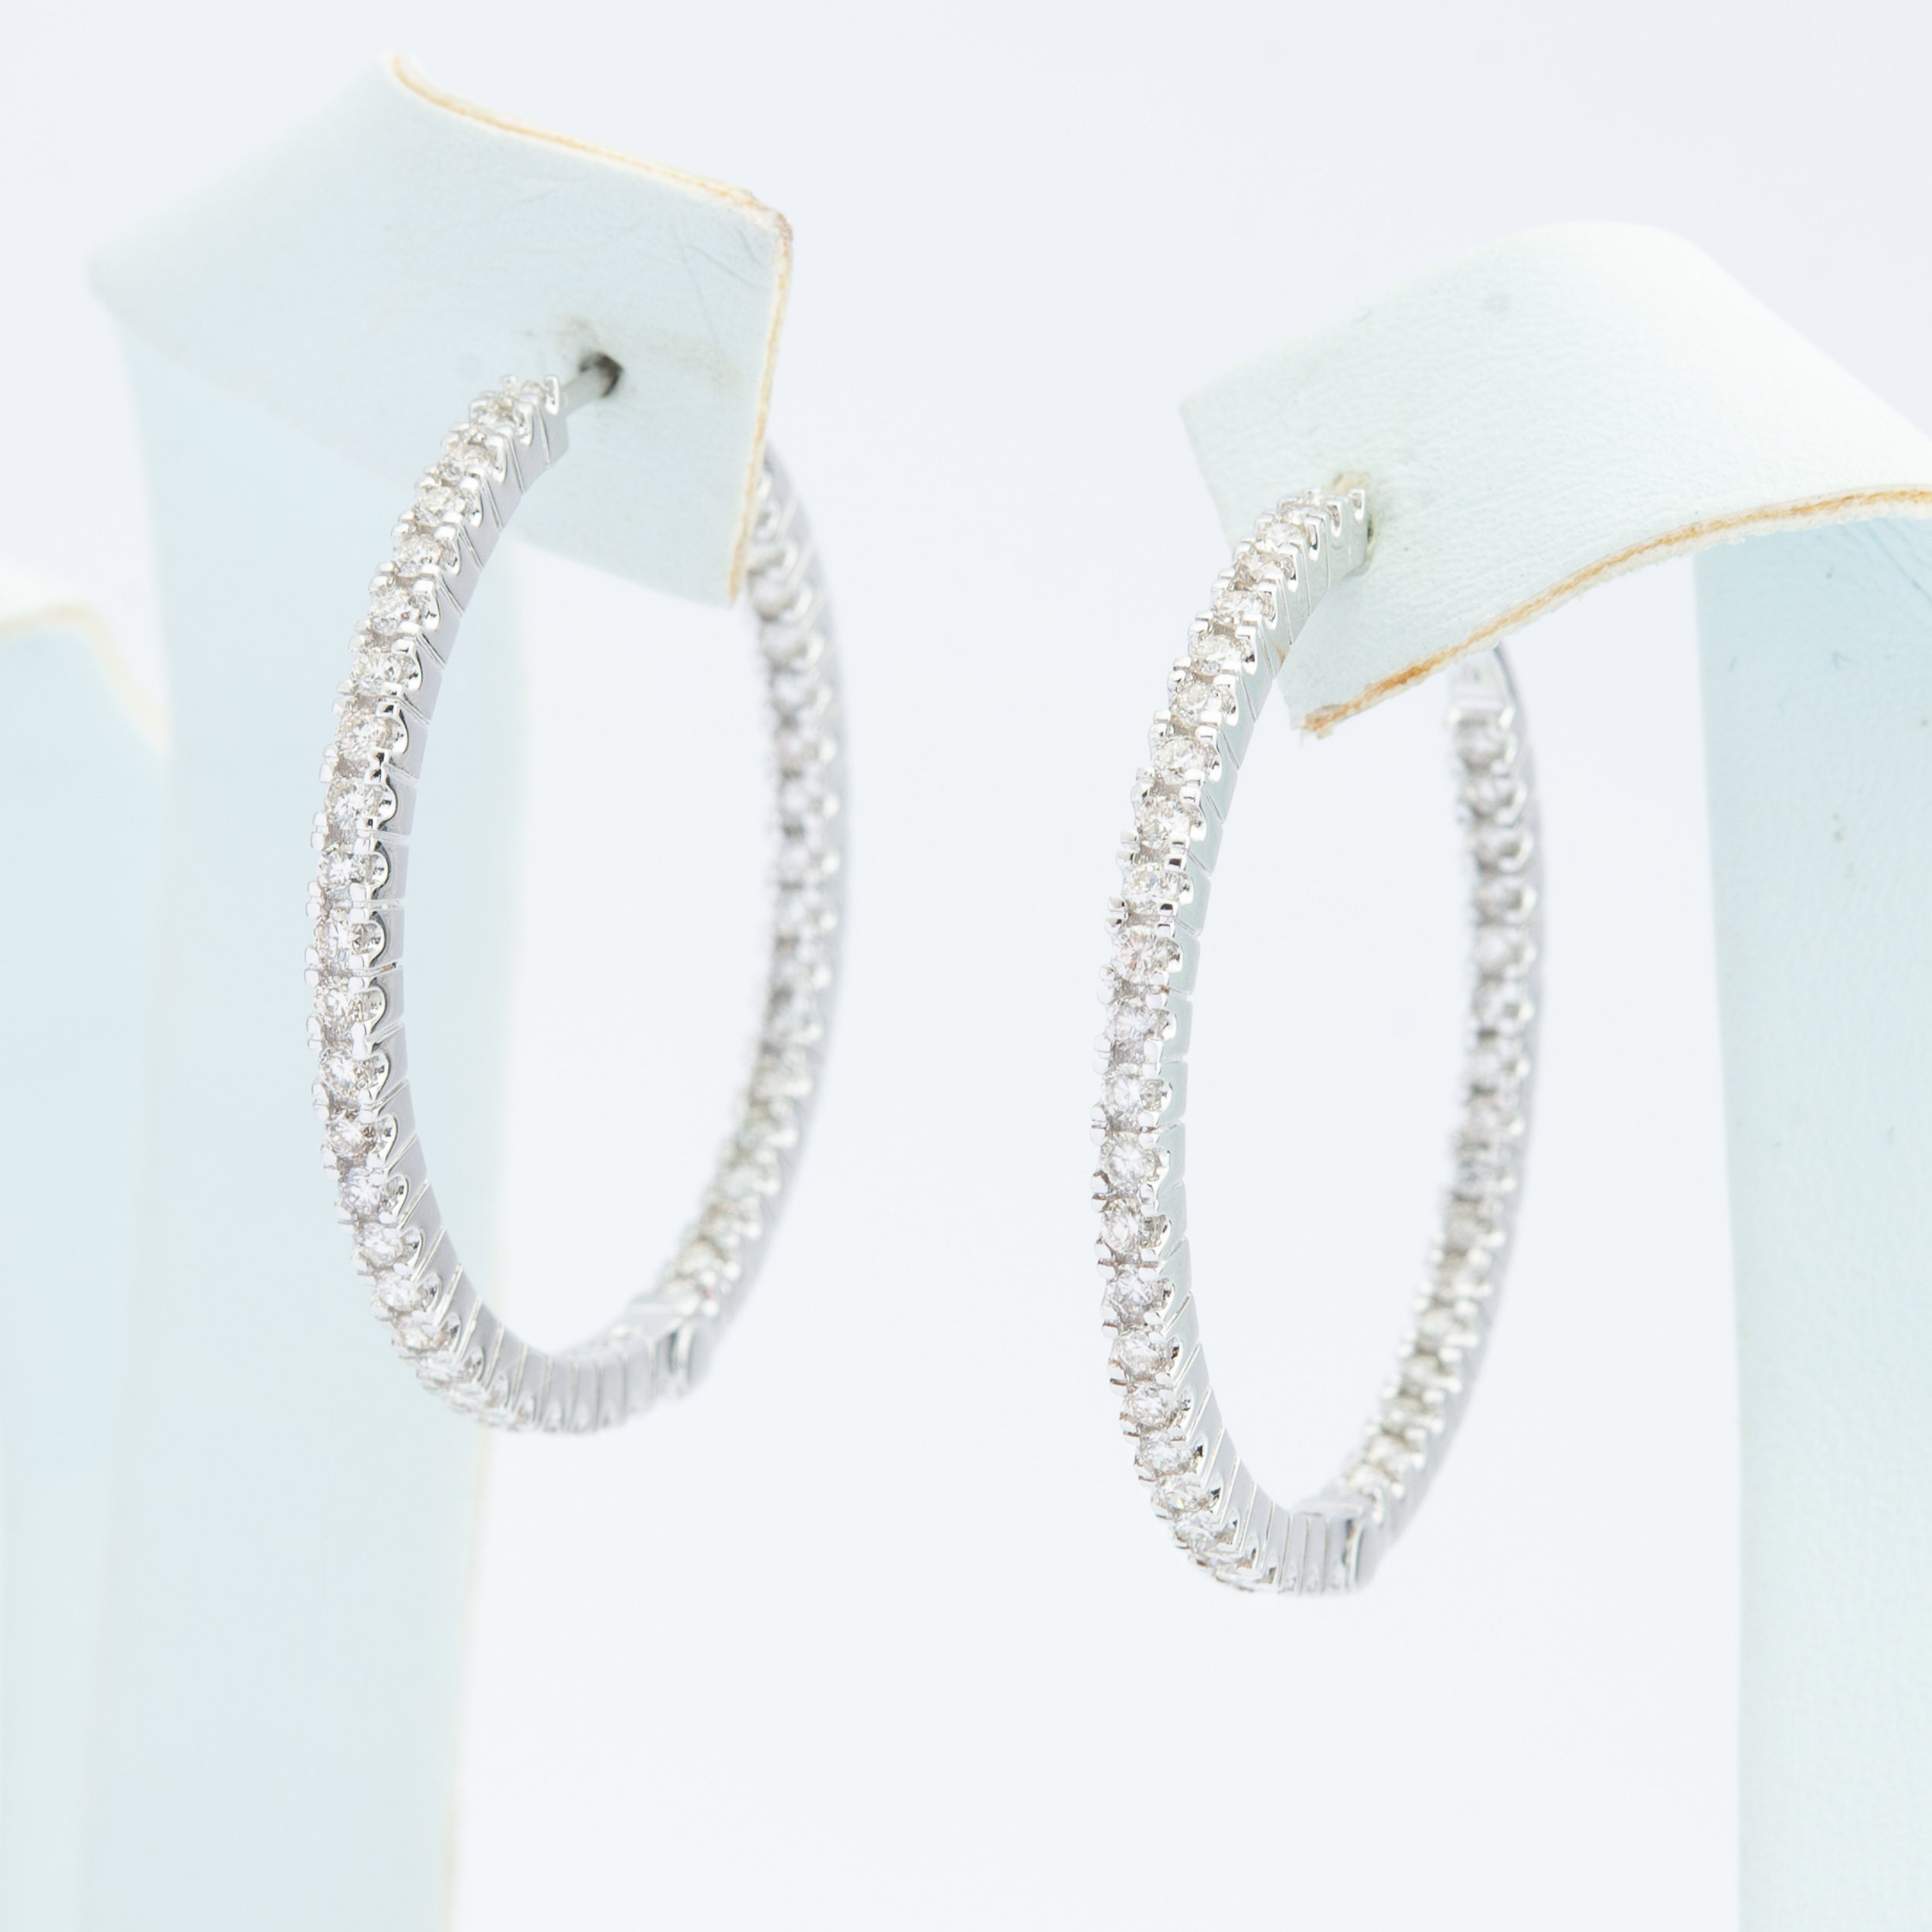 Diamond Hoop Earrings, Inside Outside Earrings 31mm, 18K White Gold